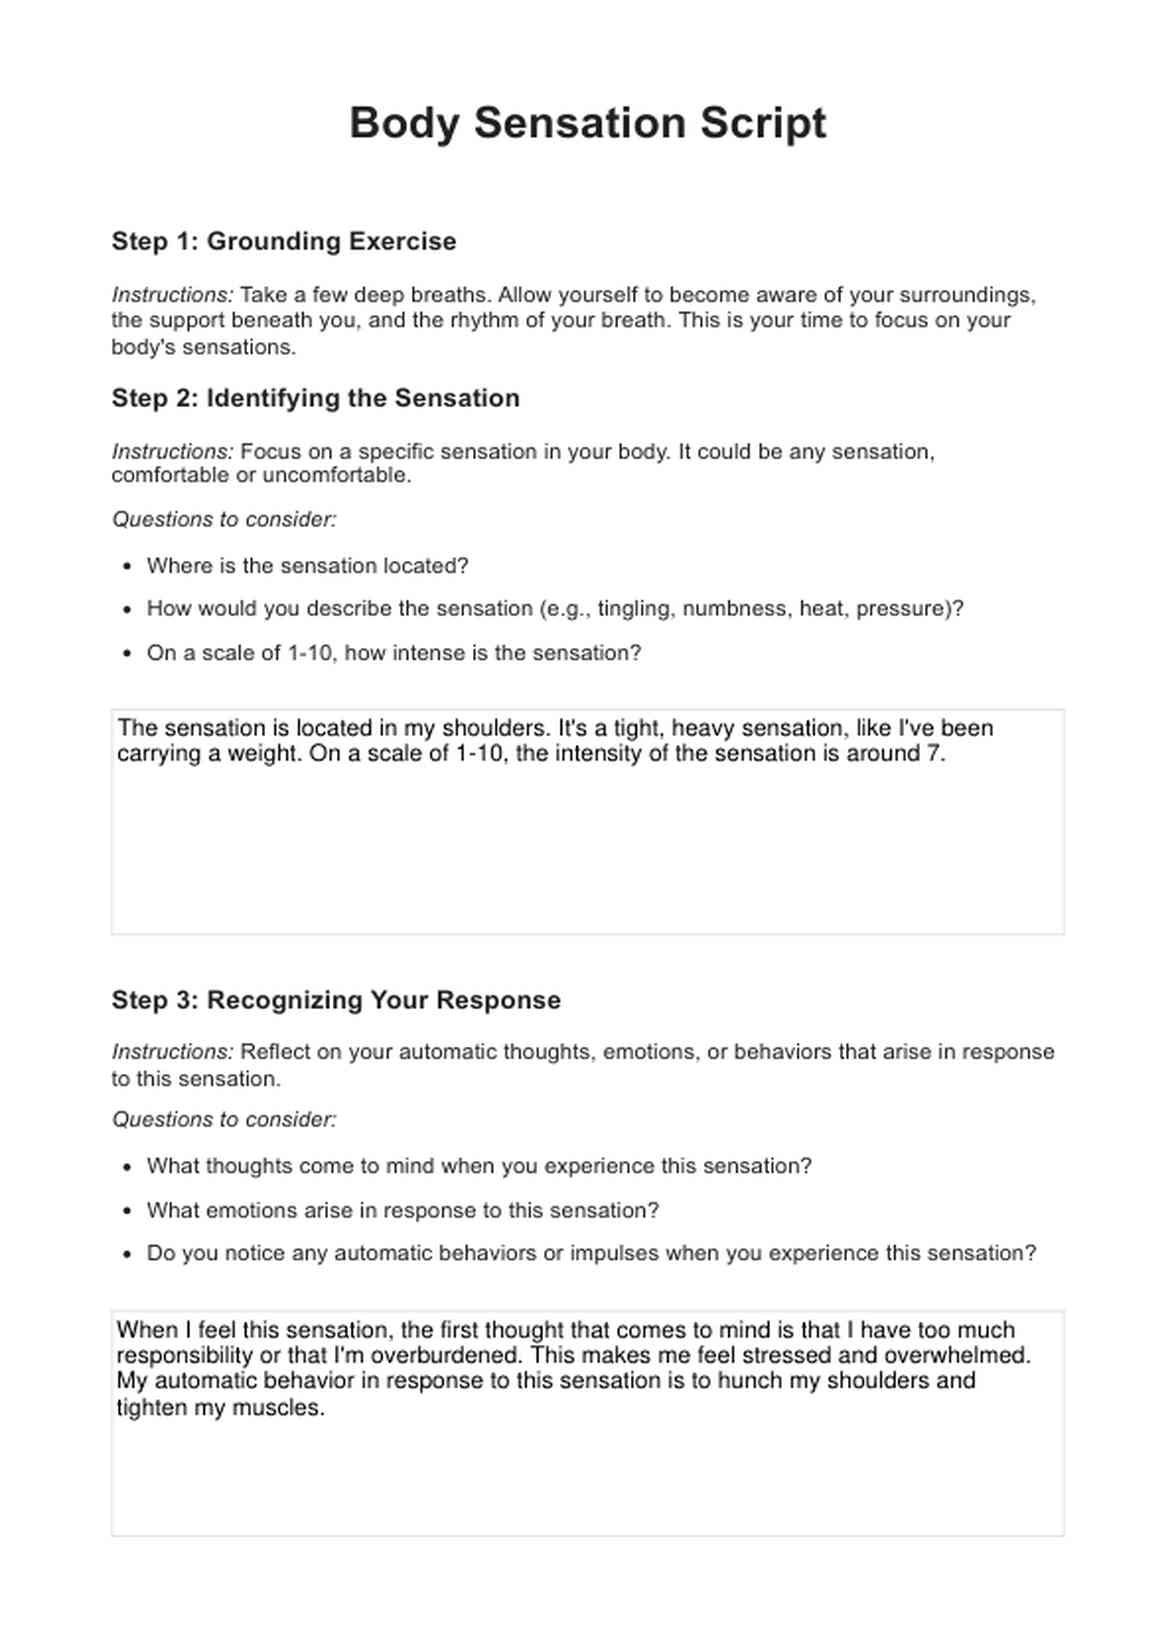 Body Sensation Scripts PDF Example